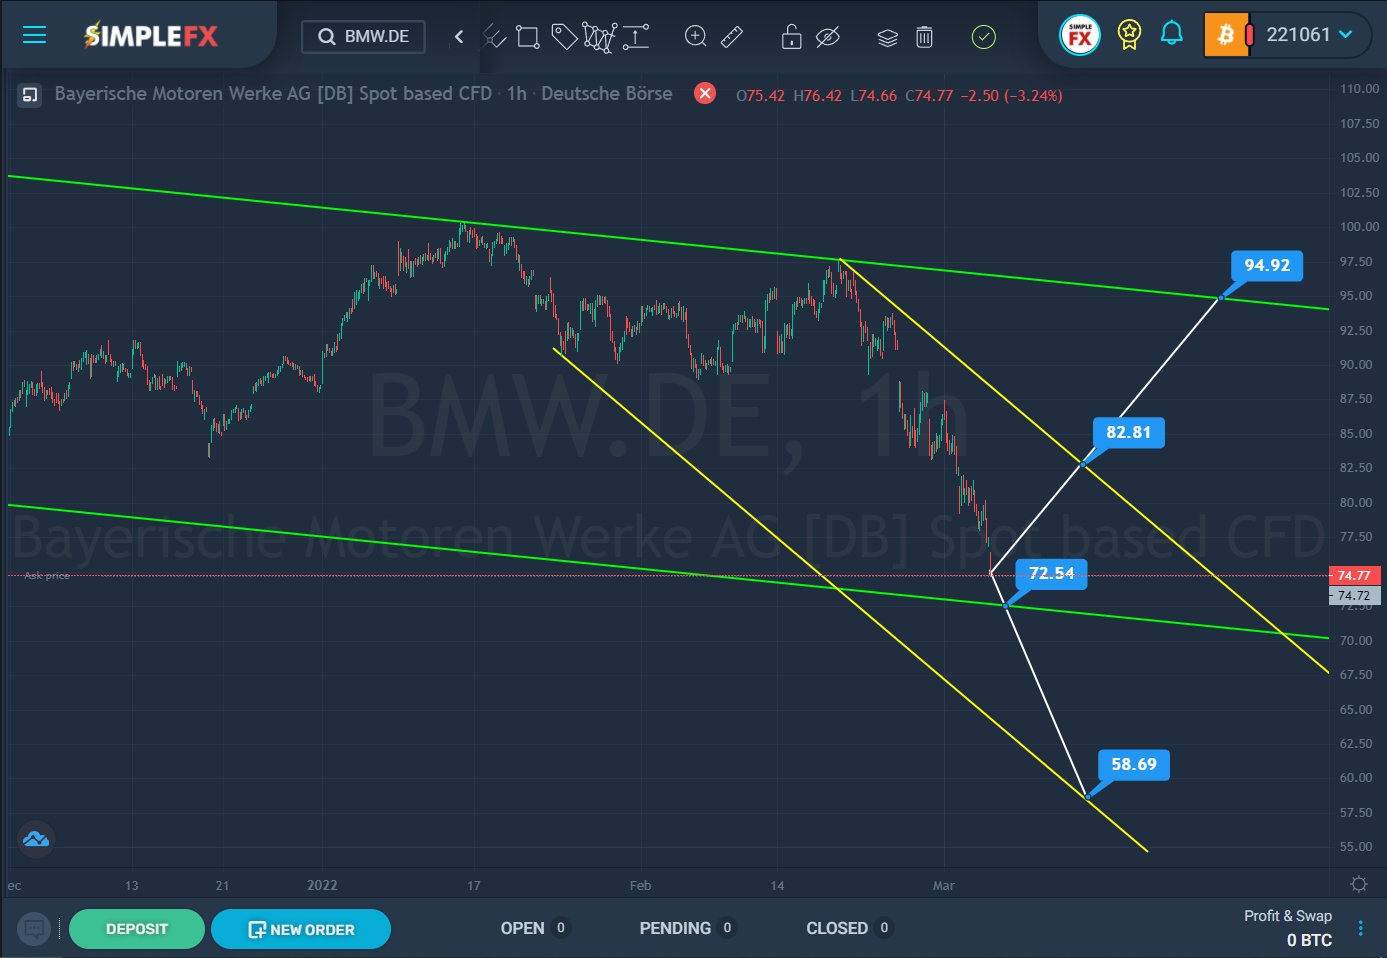 SimpleFX BMW.DE Chart Analysis: March 4, 2022